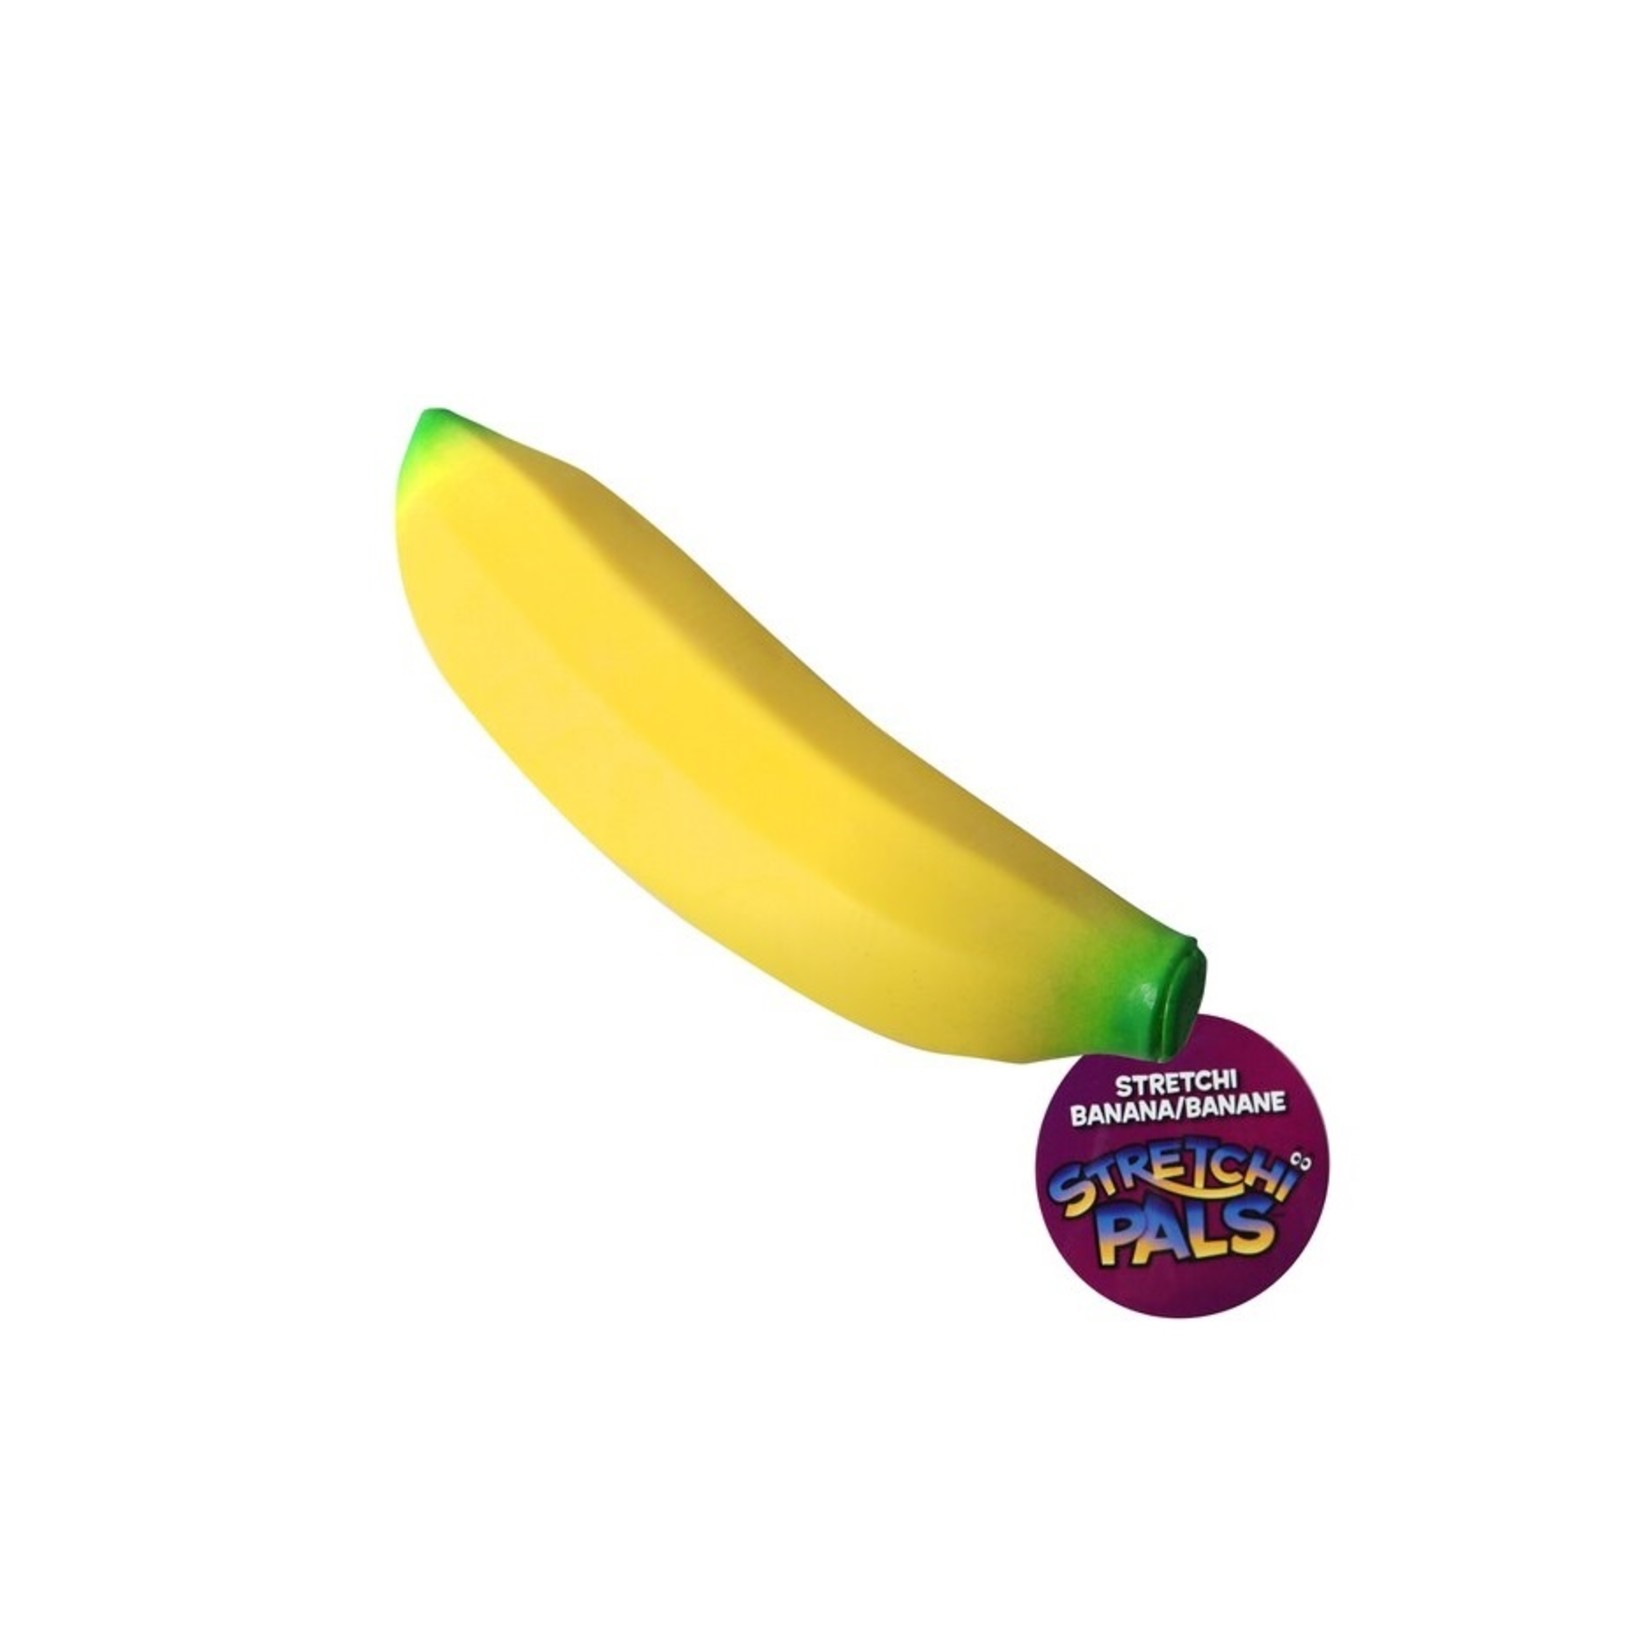 Incredible Novelties Stretchi banana